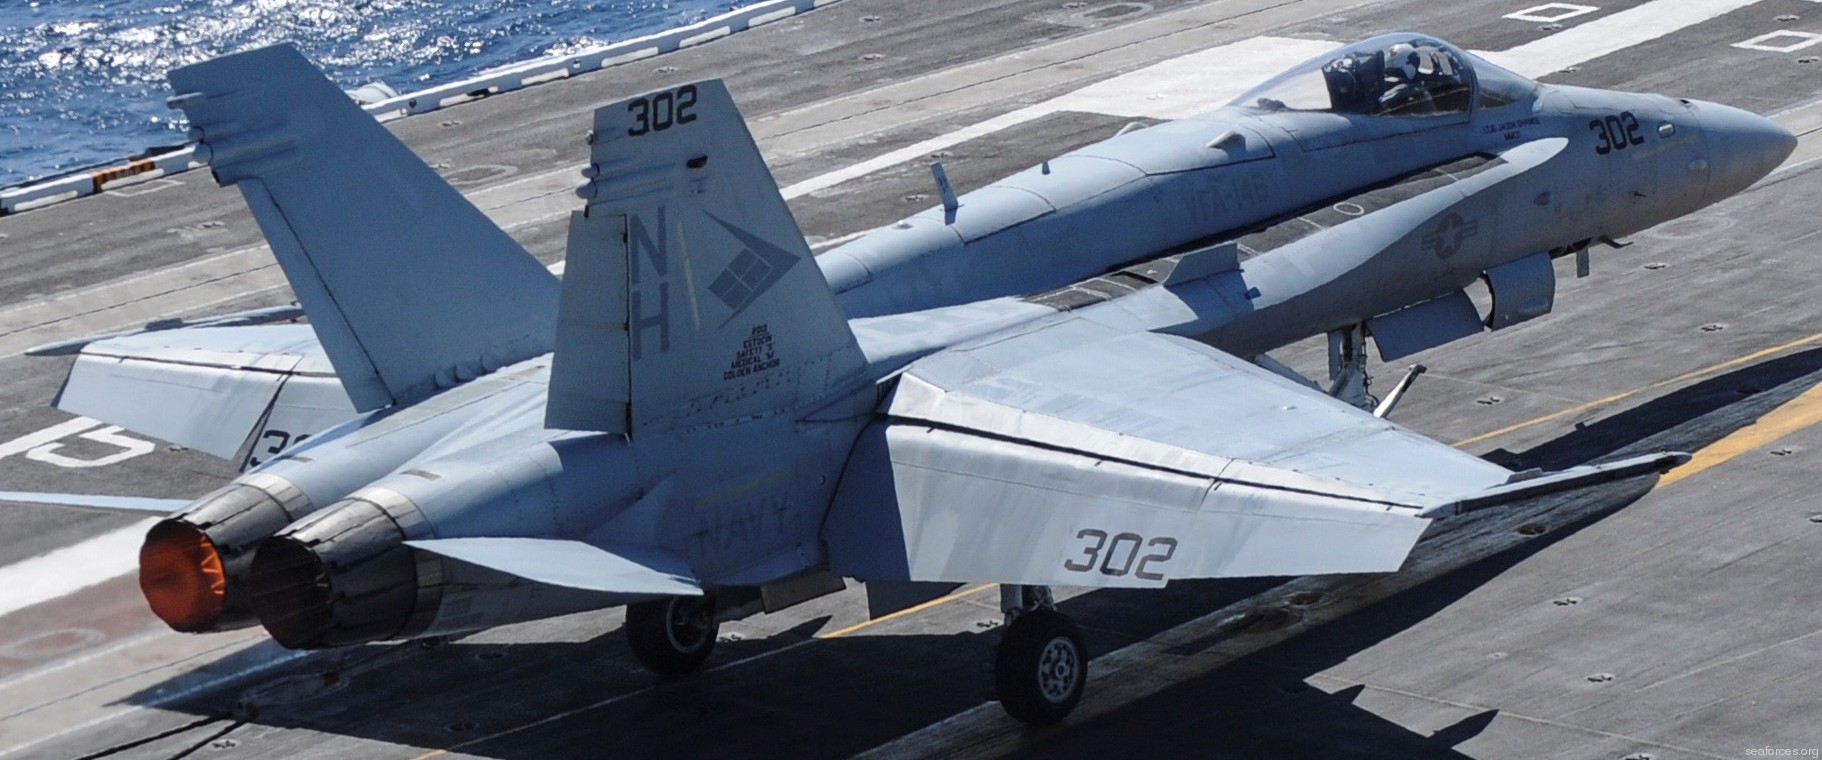 vfa-146 blue diamonds strike fighter squadron f/a-18c hornet carrier air wing cvw-11 uss nimitz cvn-68 16